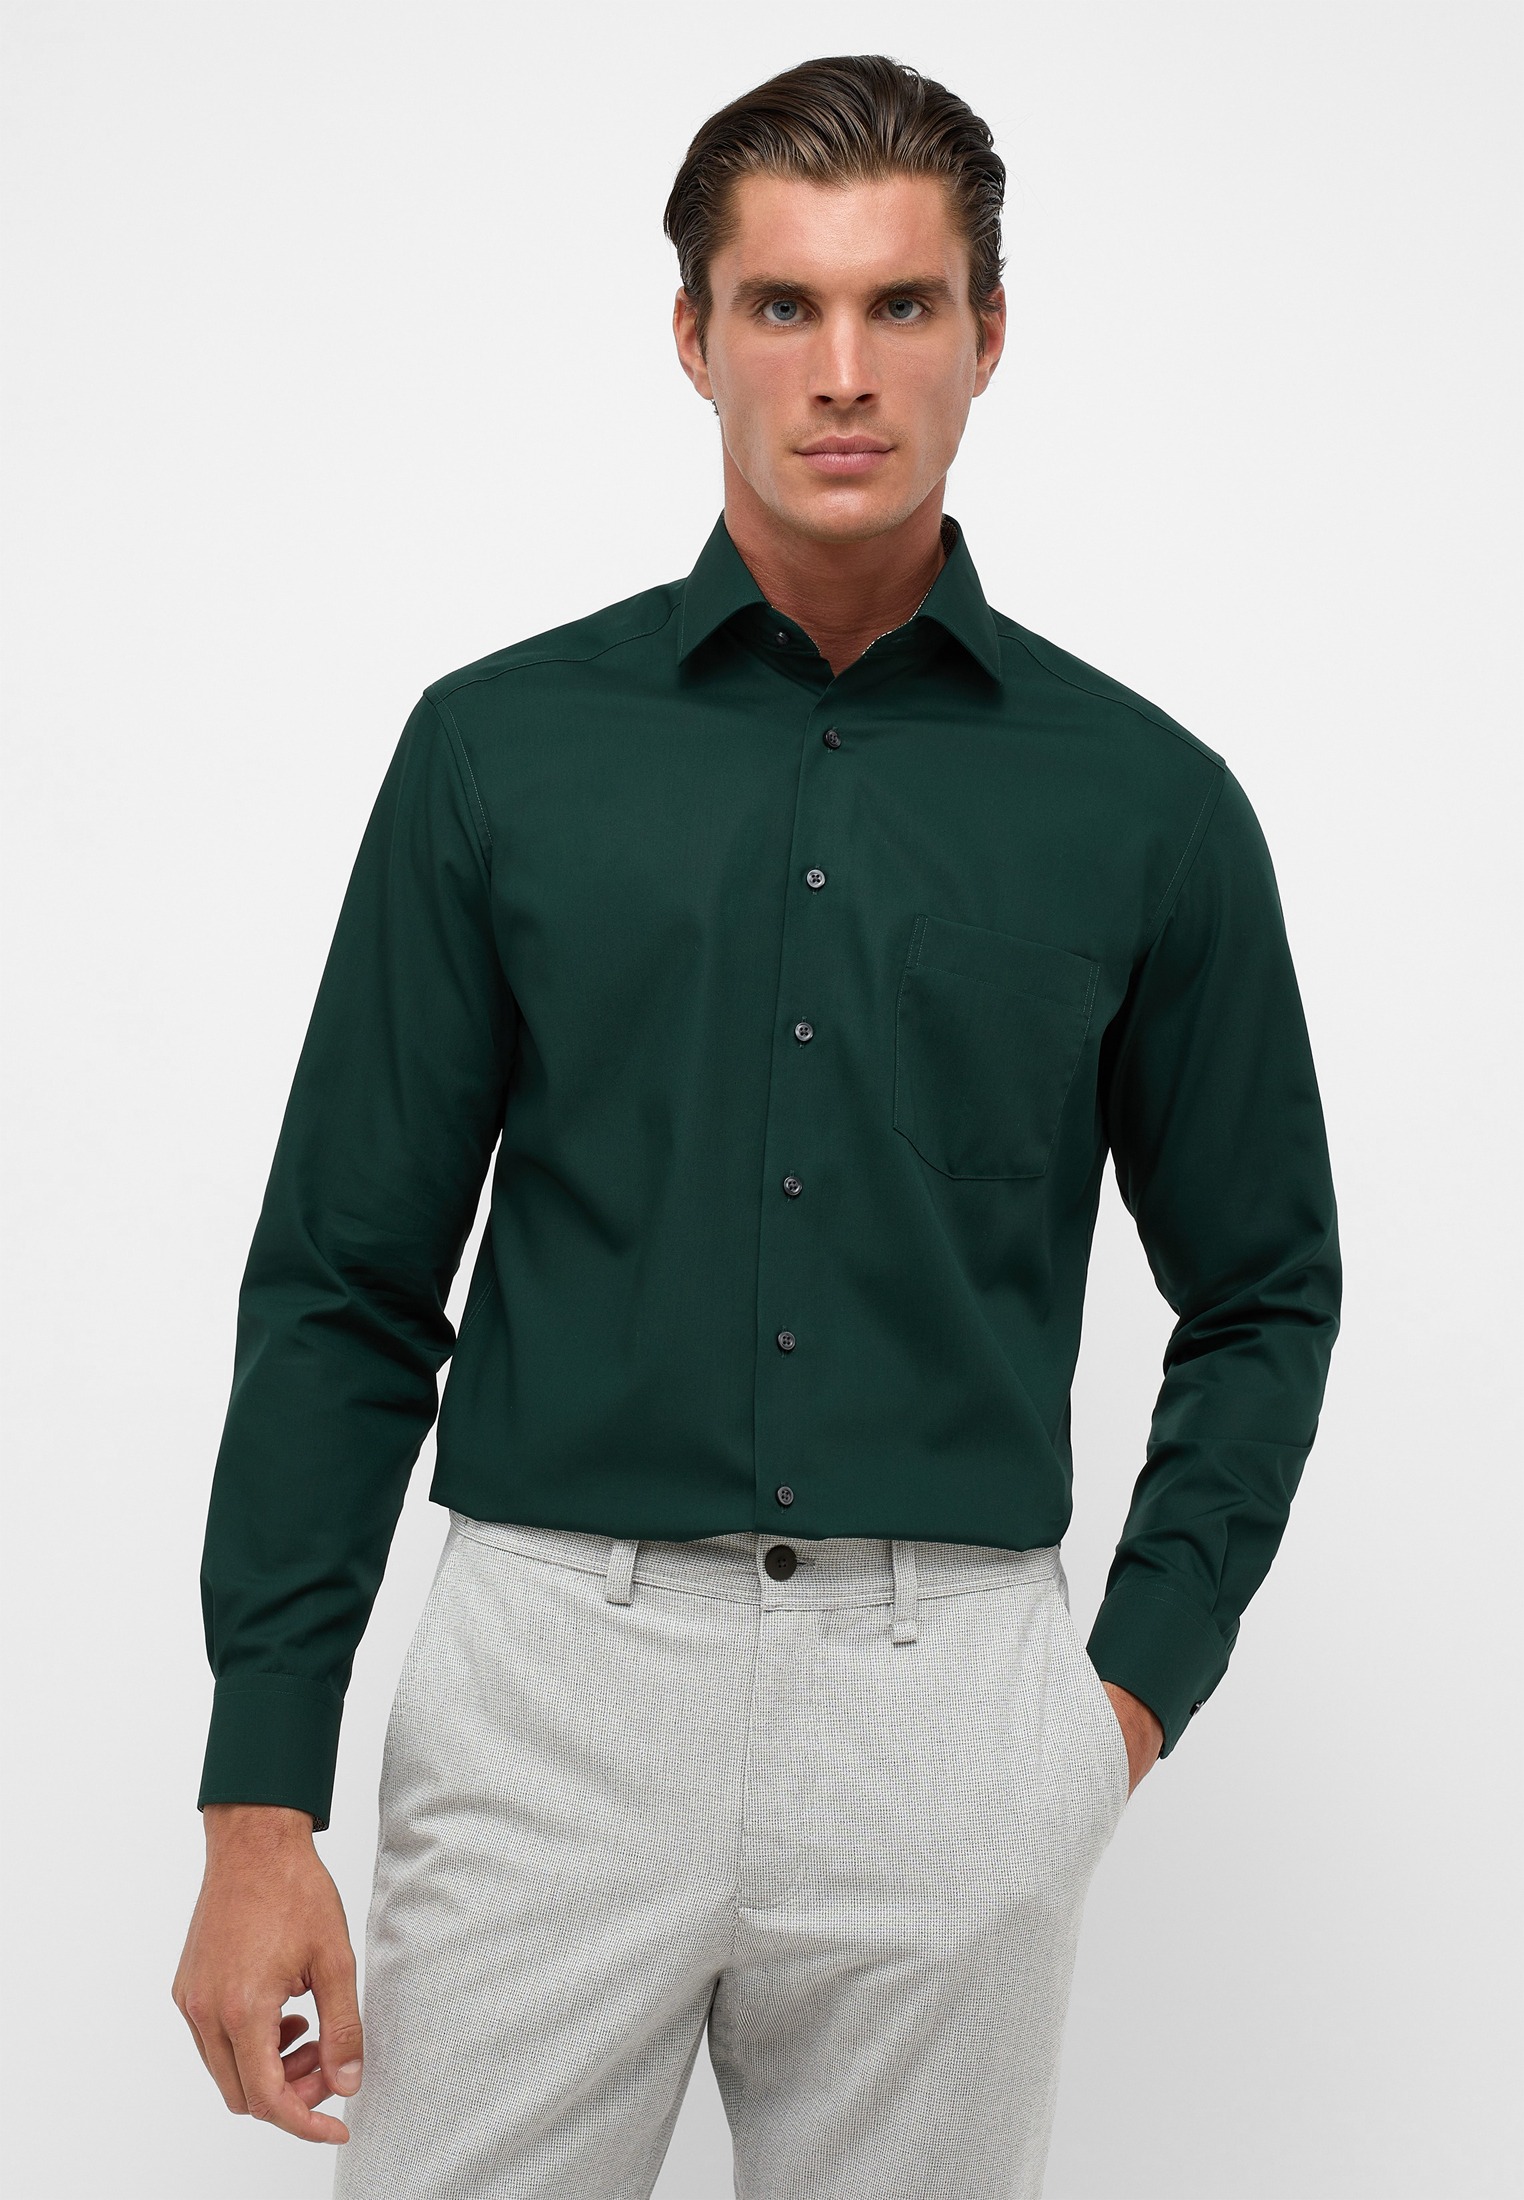 Original shirt • Modern fit, limited stock (1303) - First For Men